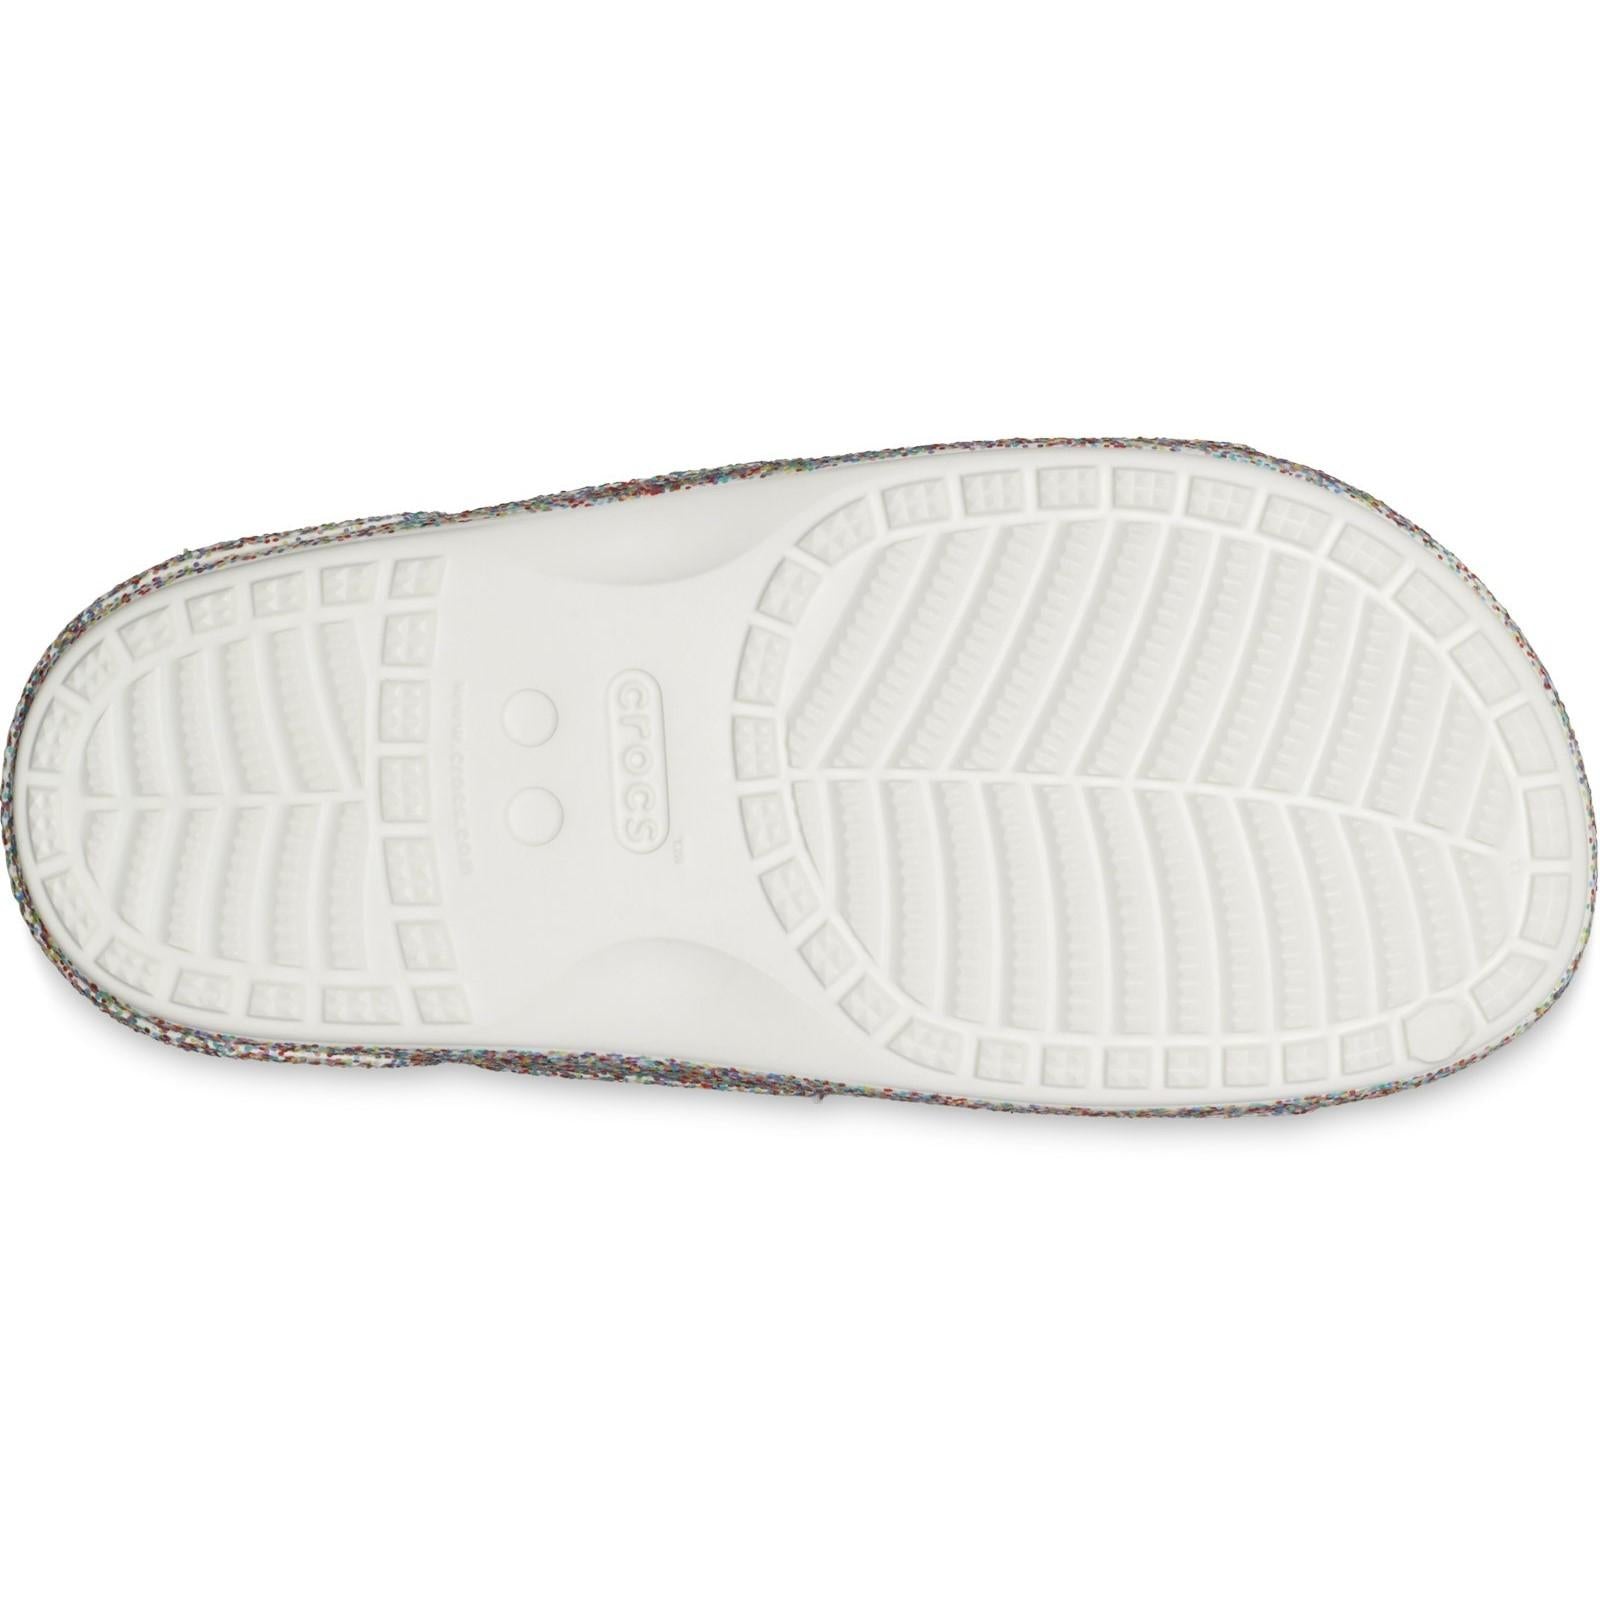 Crocs Classic Sprinkles Sandal